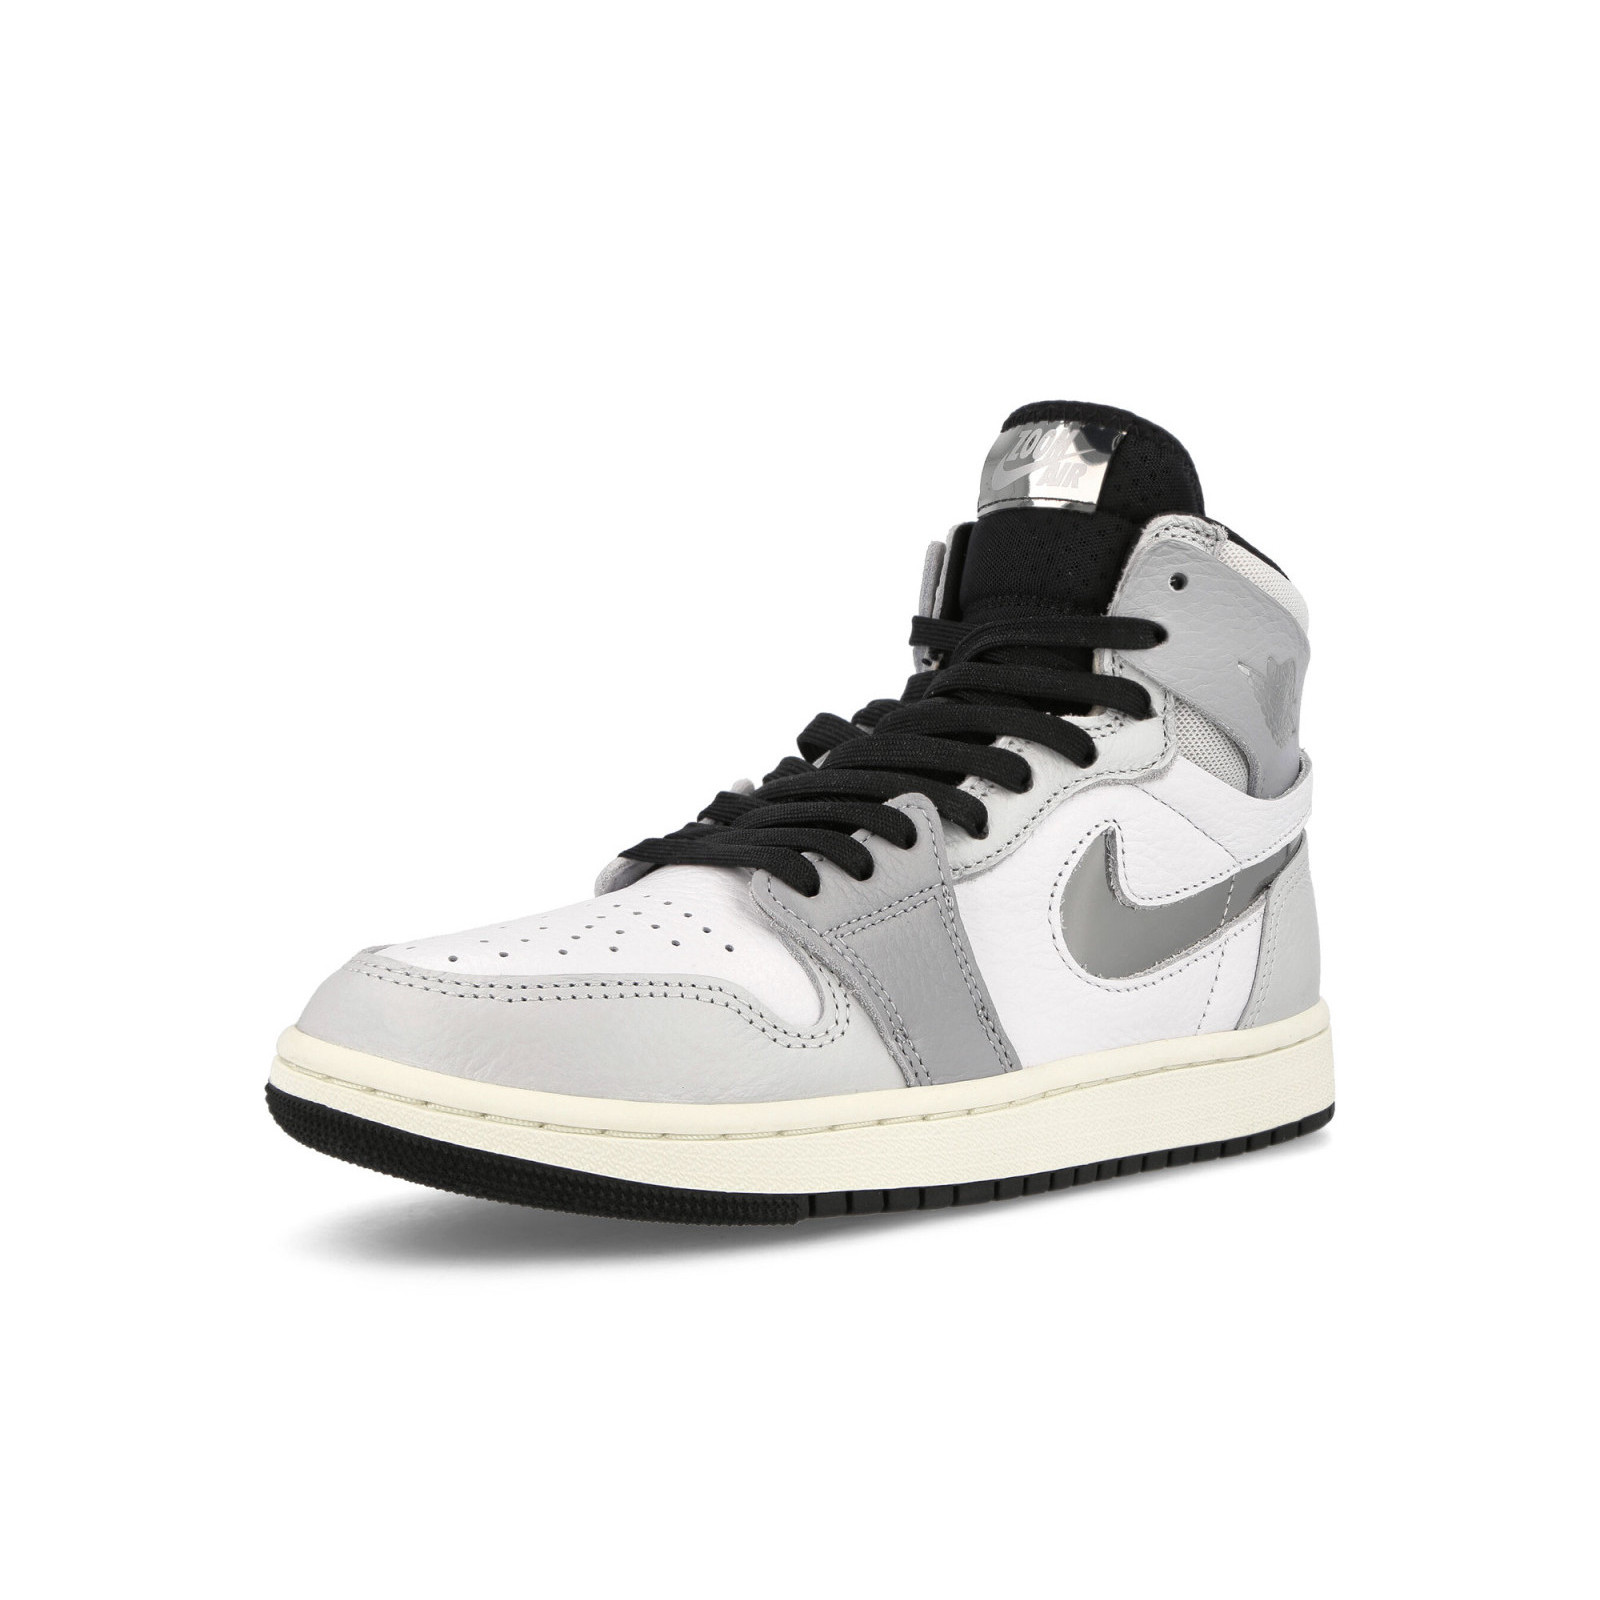 Air Jordan 1 Zoom Comfort 2
White / Silver Photon Dust